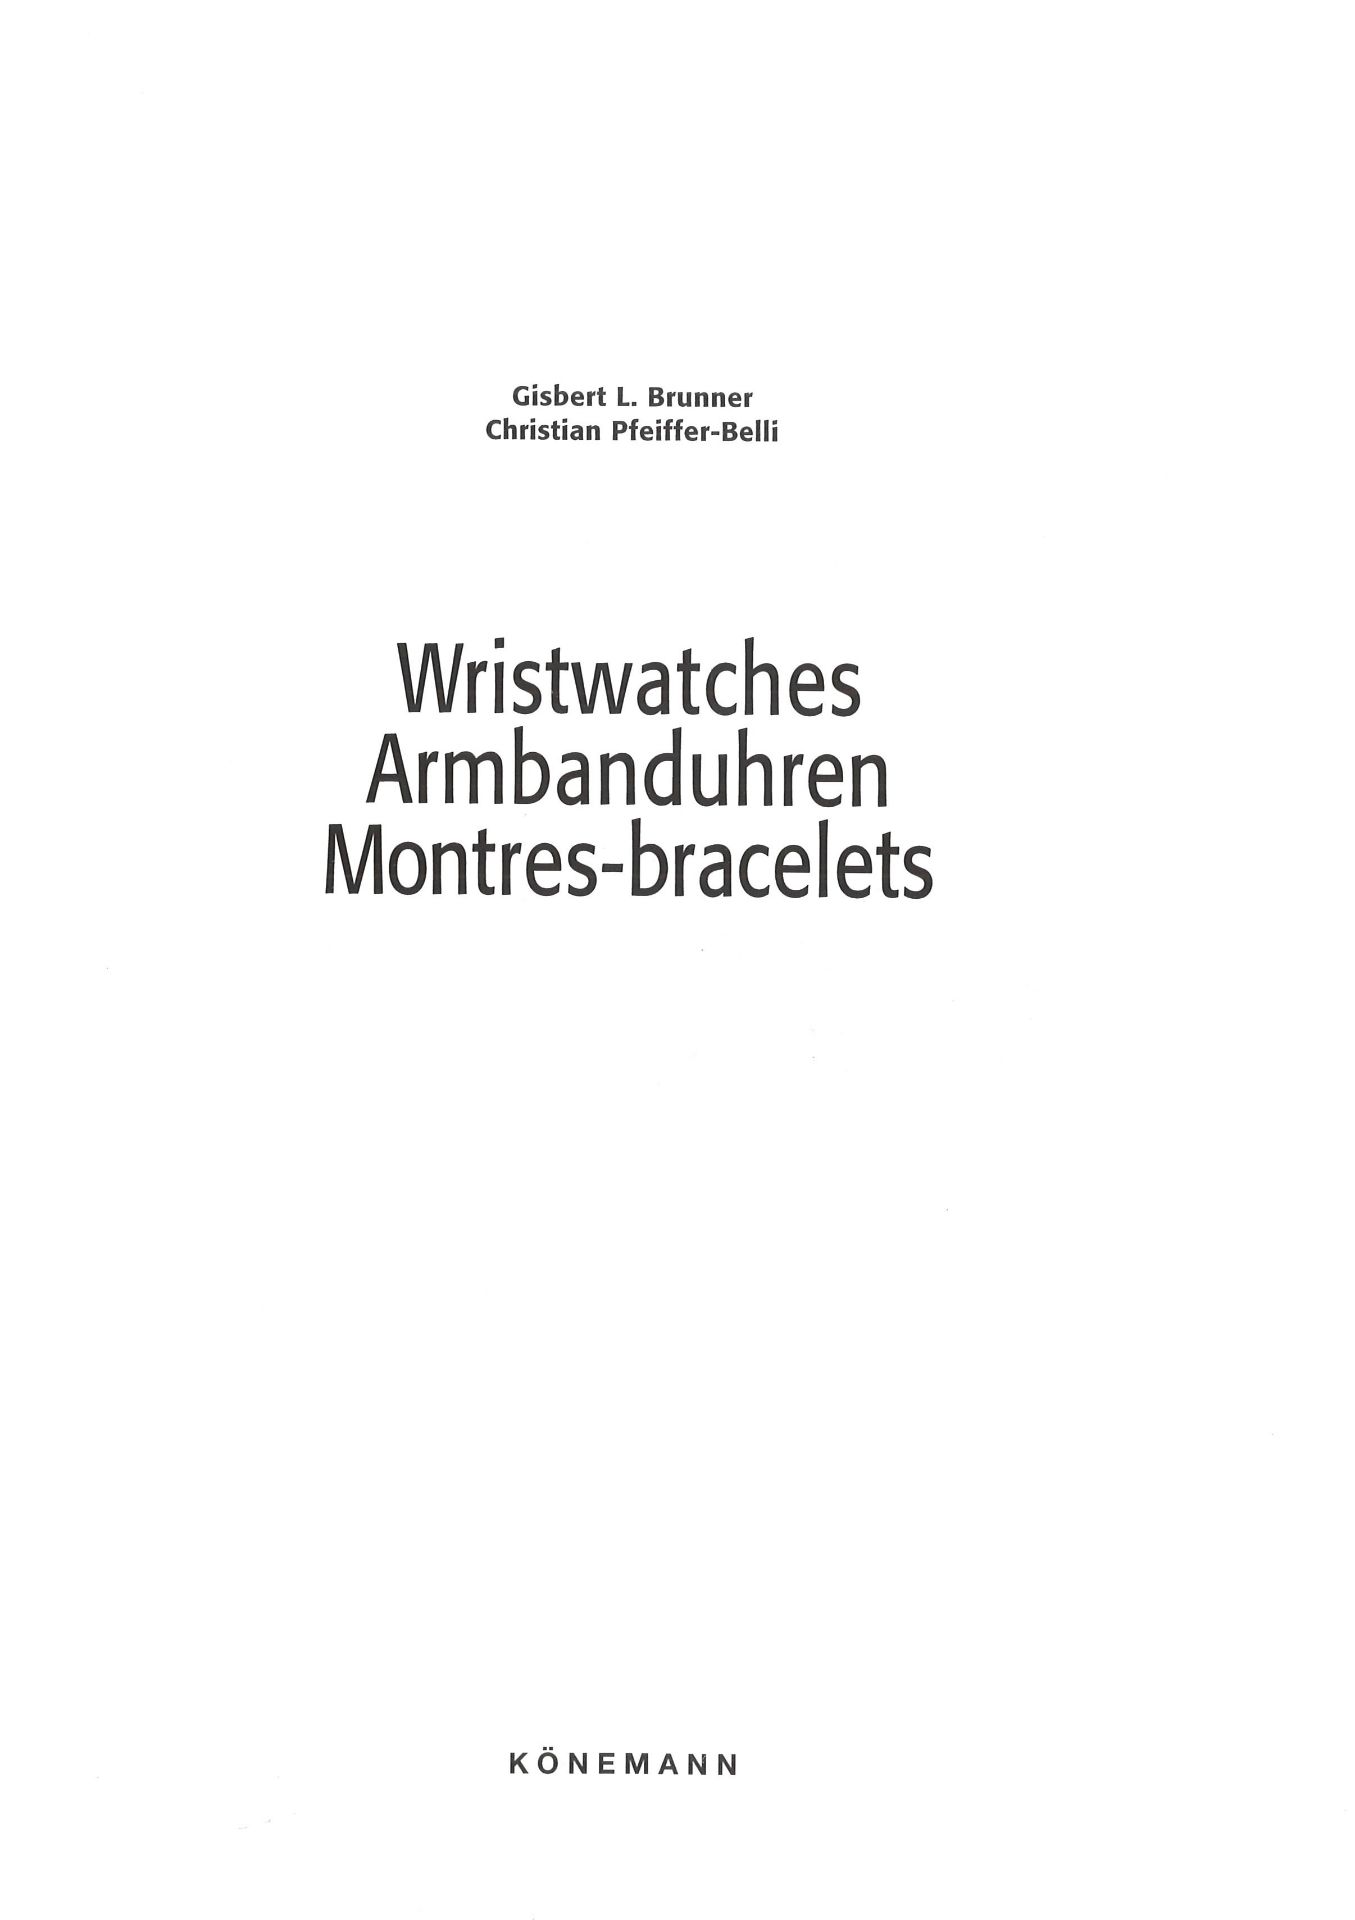 Brunner, Gisbert L. und Christian Pfeiffer-Belli - Wristwatches: Armbanduhren: Montres-bracelets. - Image 2 of 3